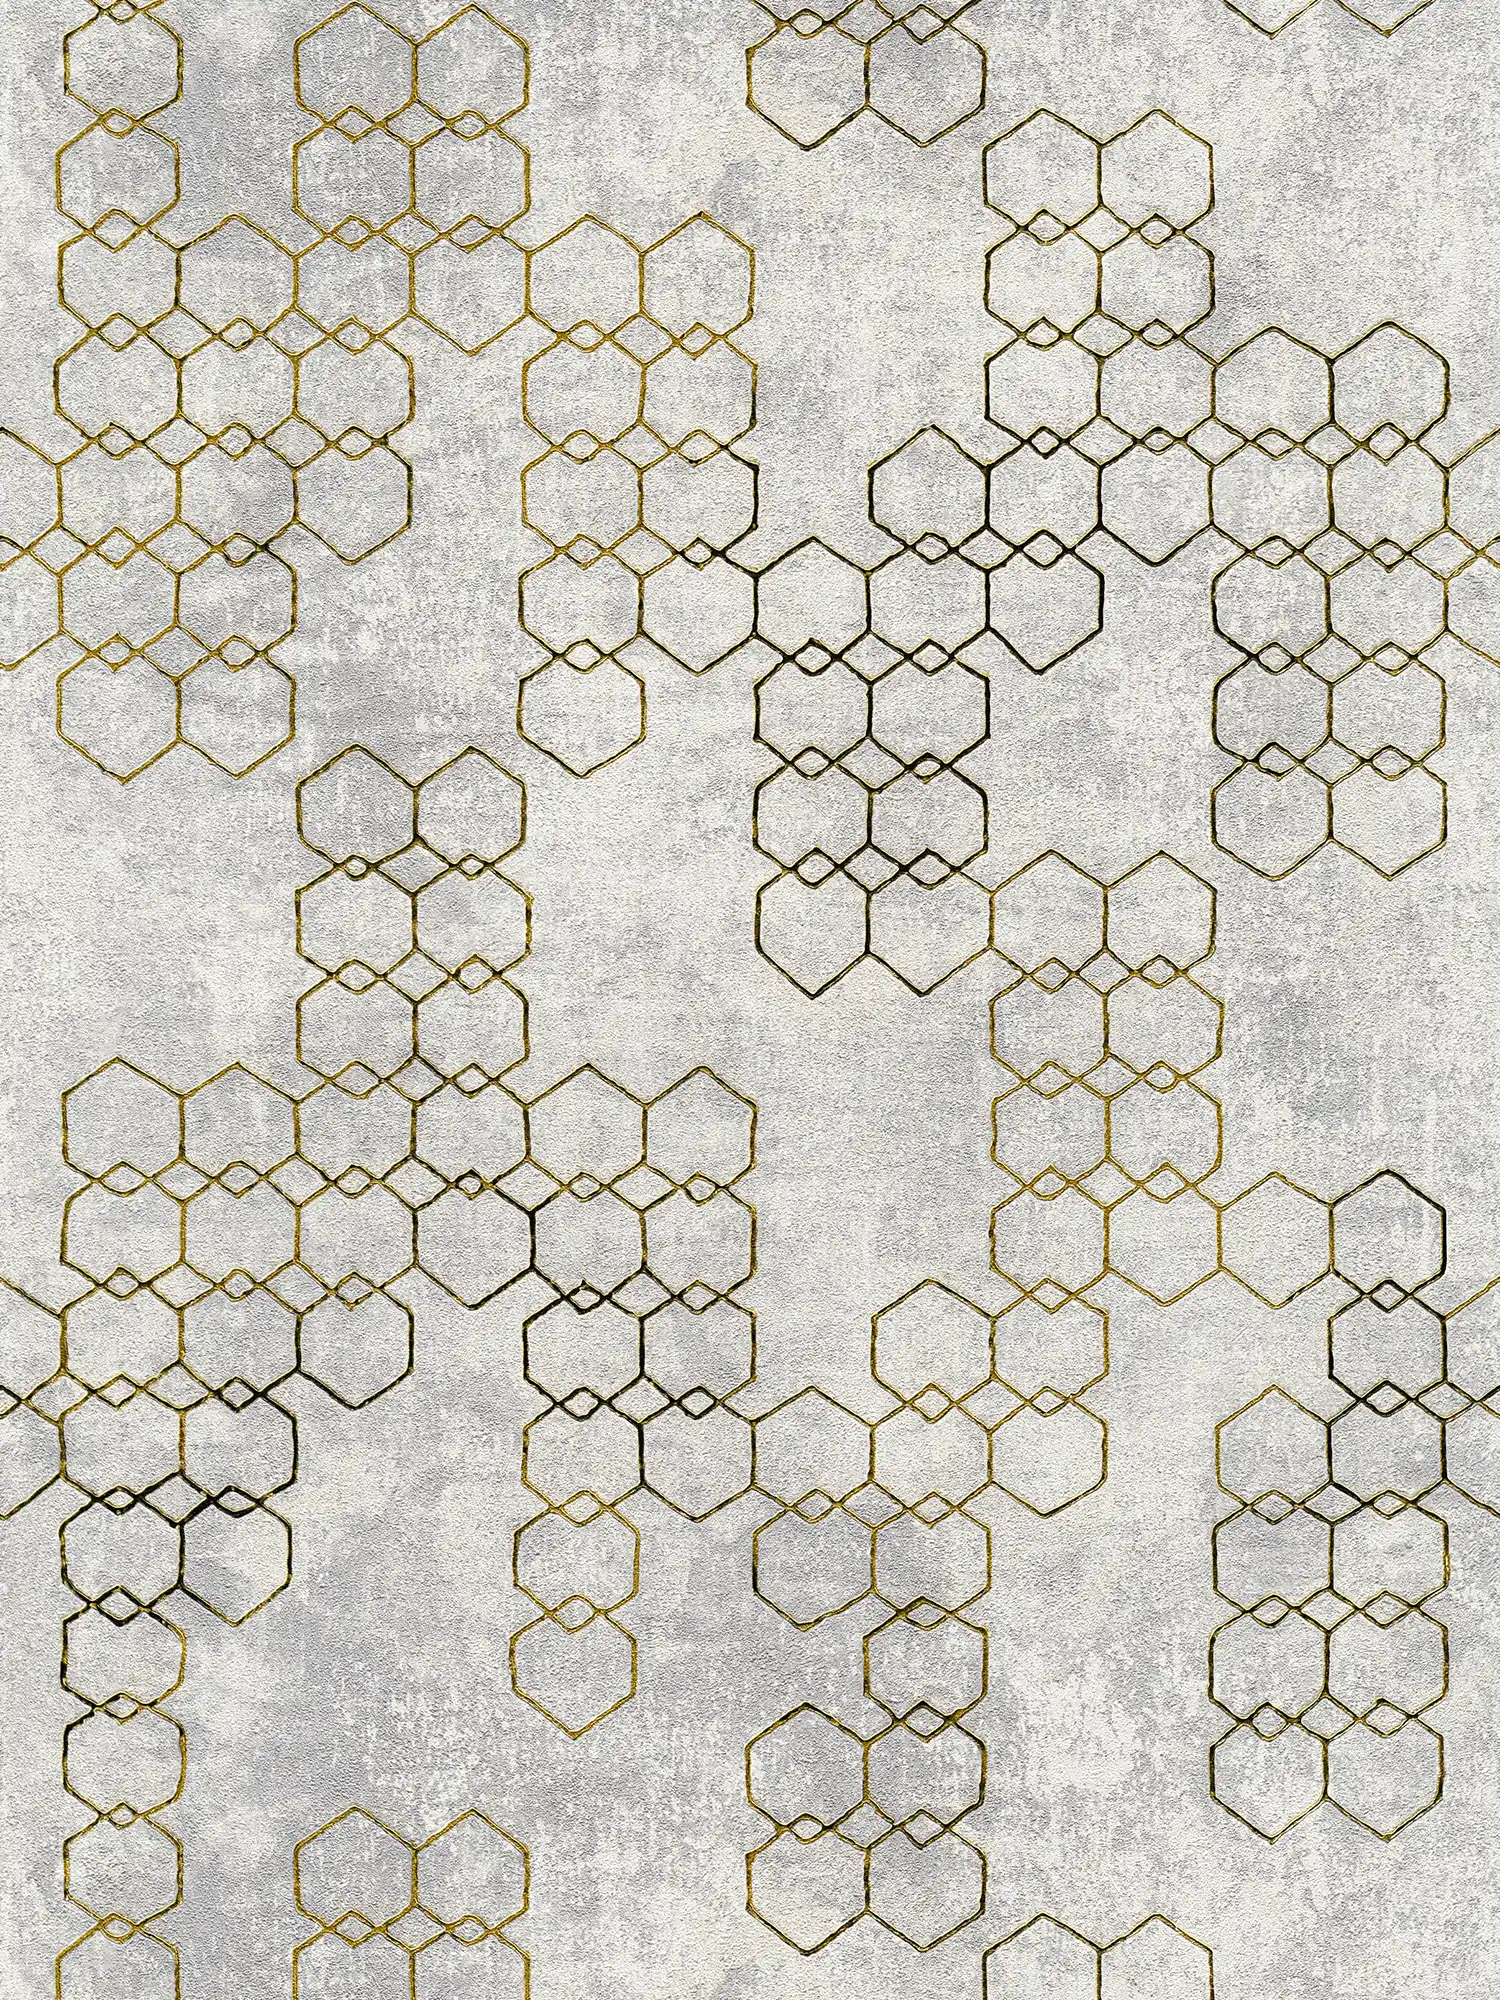         Tapete modernes Design Gold & Beton Effekt – Grau, Gold
    